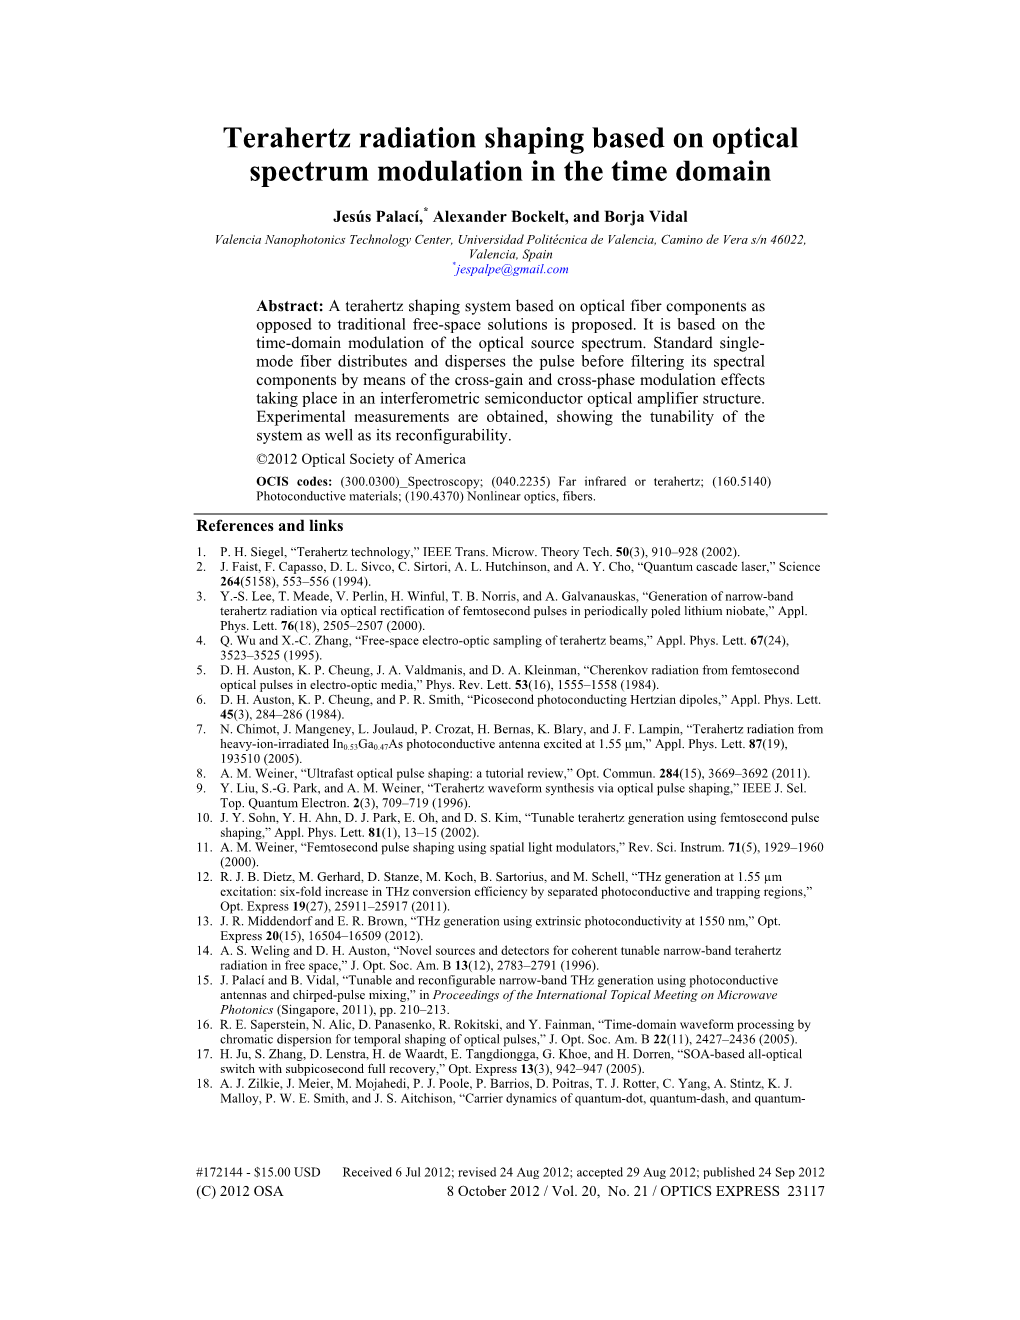 Terahertz Radiation Shaping Based on Optical Spectrum Modulation in the Time Domain